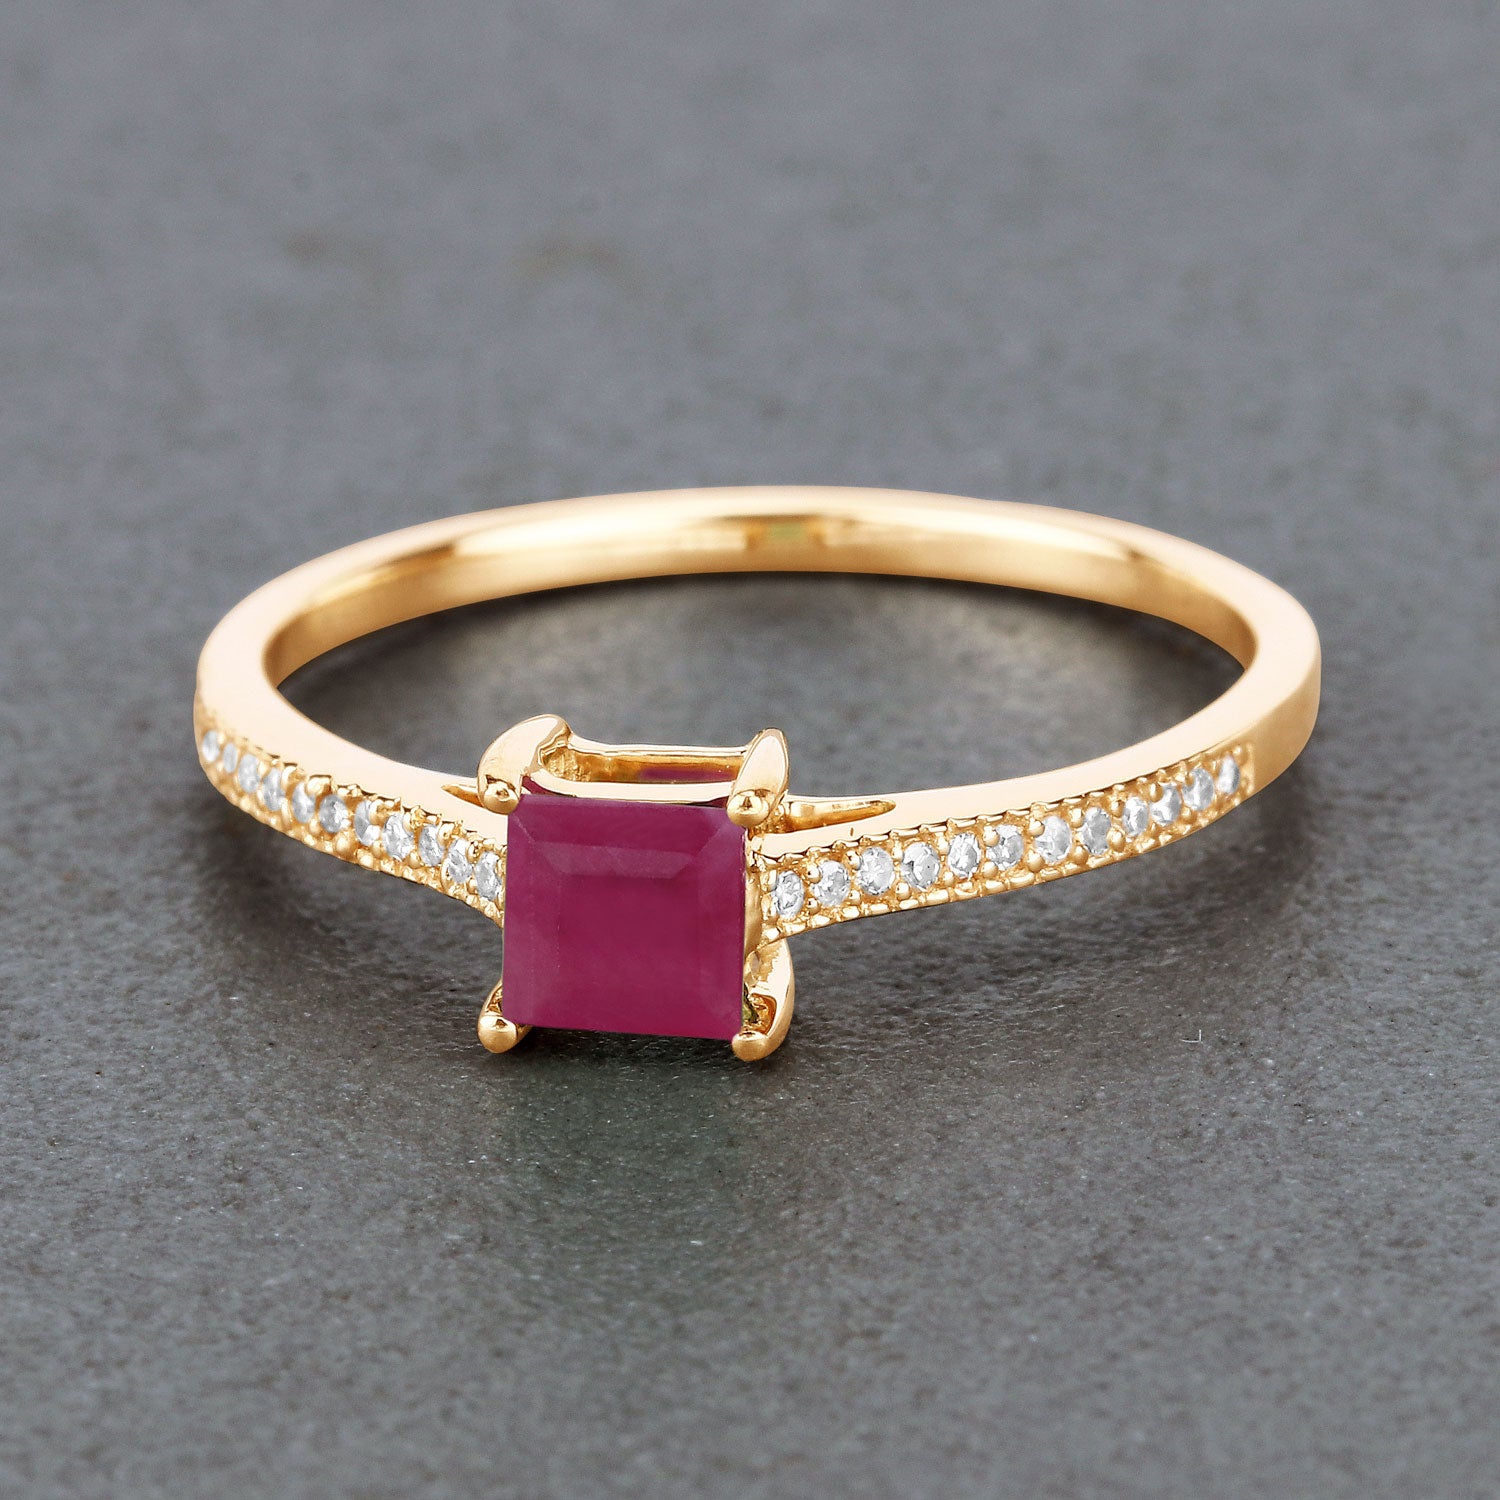 0.67 Carat Genuine Ruby and White Diamond 14K Yellow Gold Ring